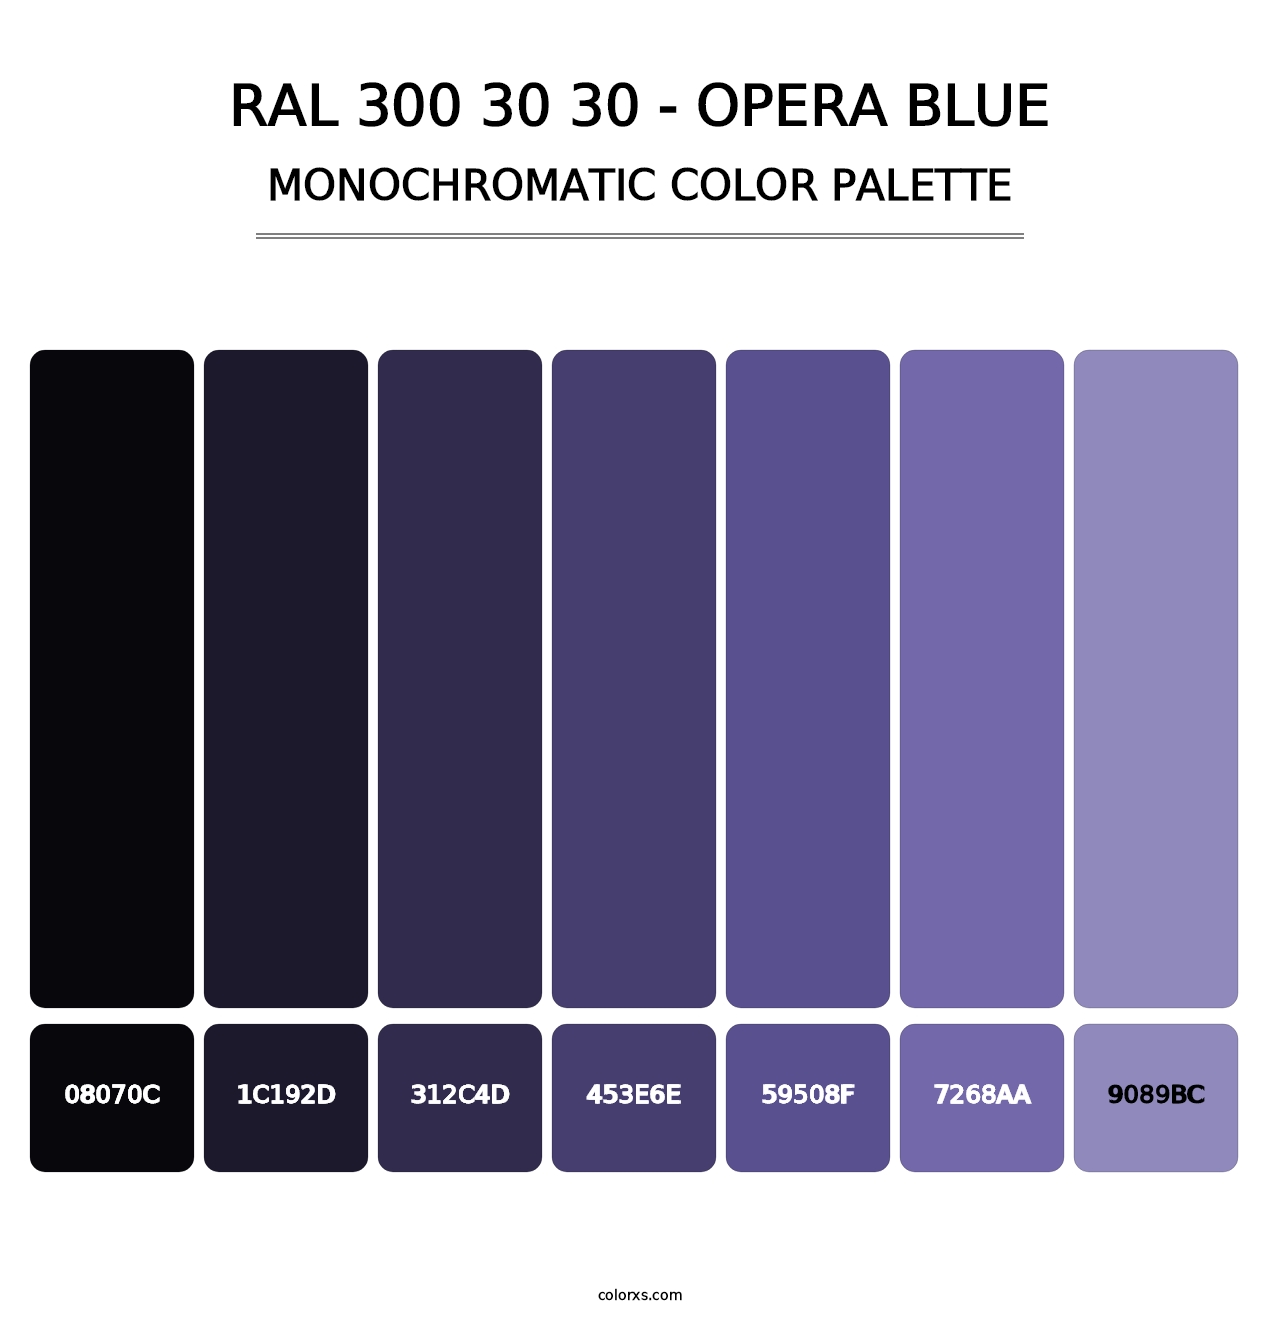 RAL 300 30 30 - Opera Blue - Monochromatic Color Palette